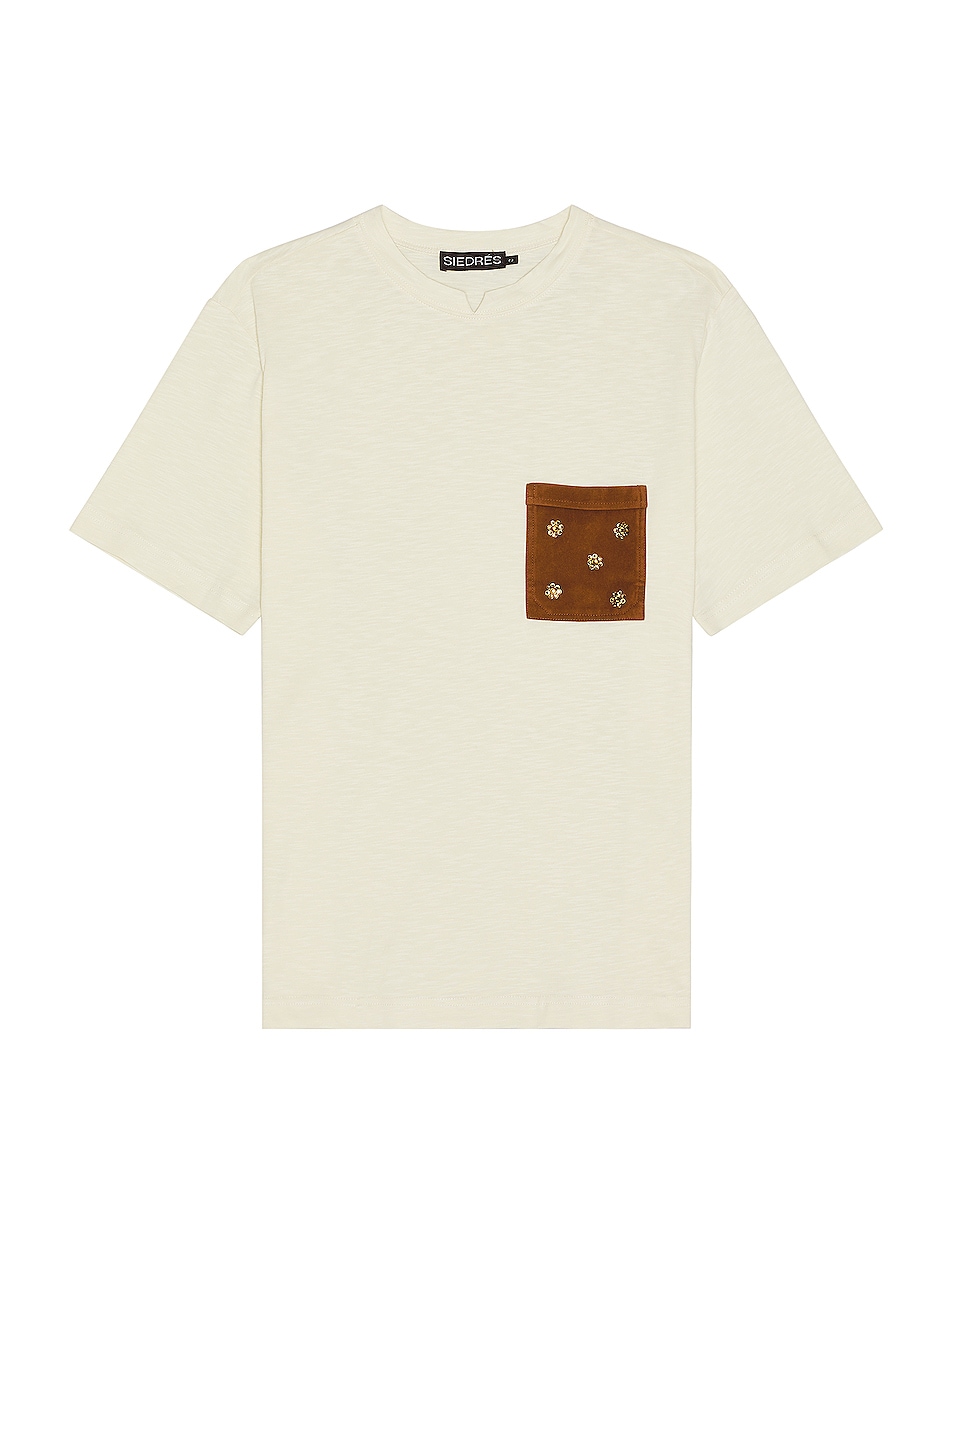 Rhinestones T-shirt in Cream